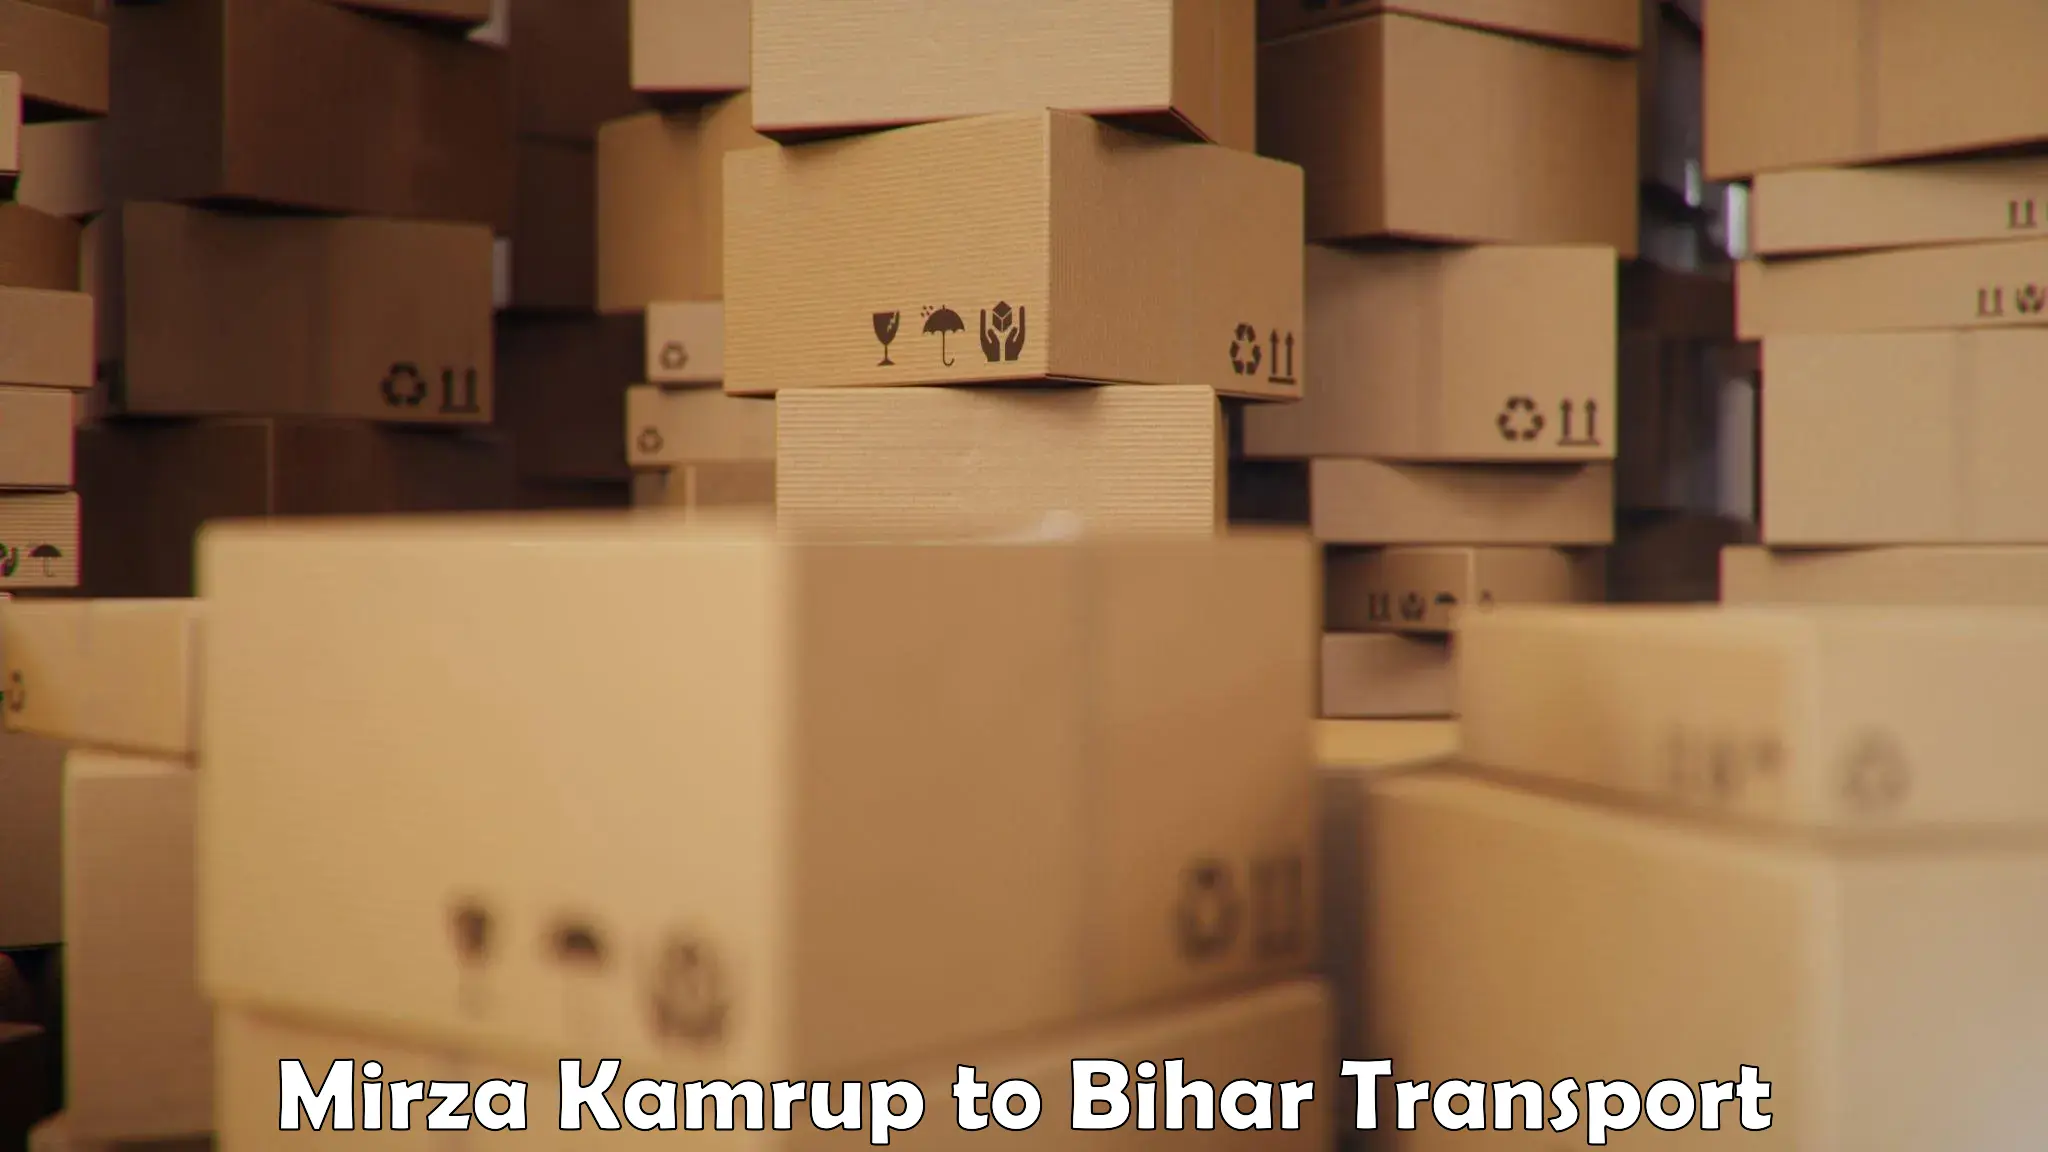 Truck transport companies in India Mirza Kamrup to Mahaddipur